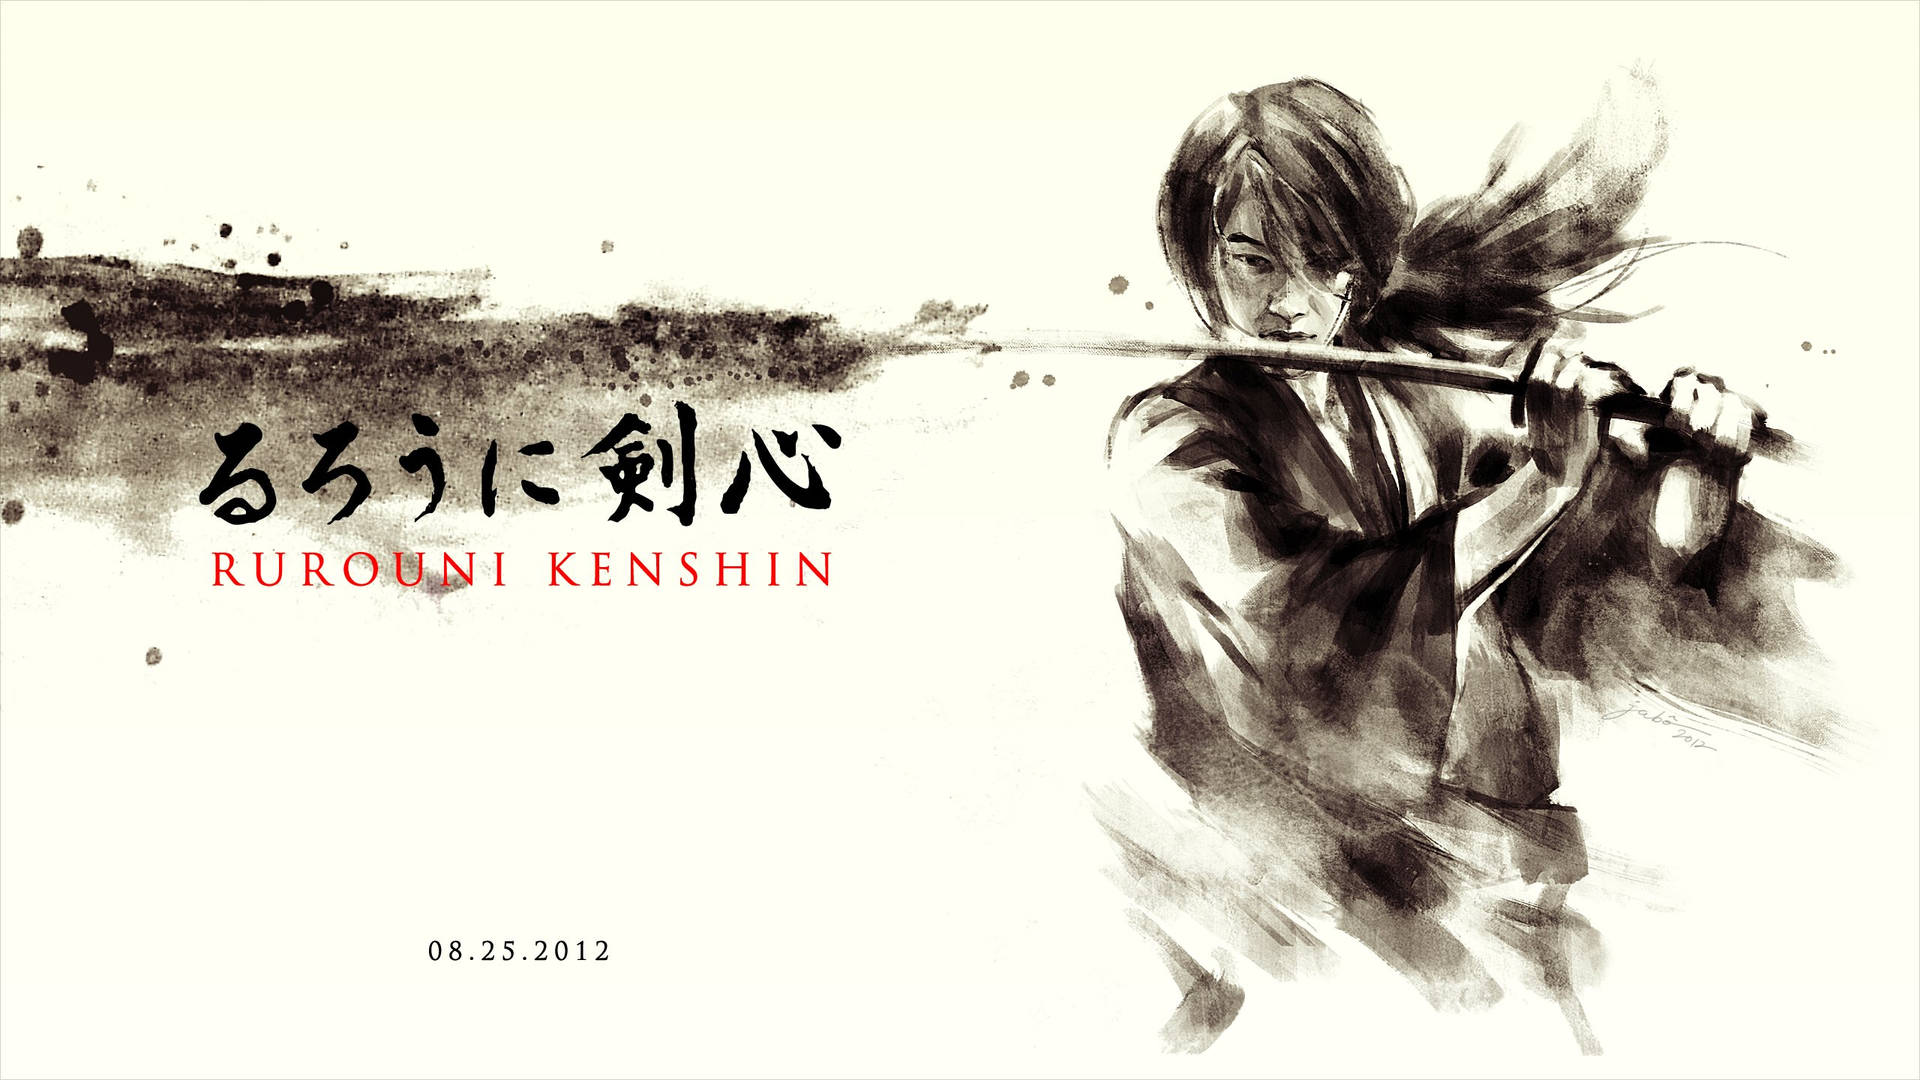 Rurouni Kenshin Poster Art Background